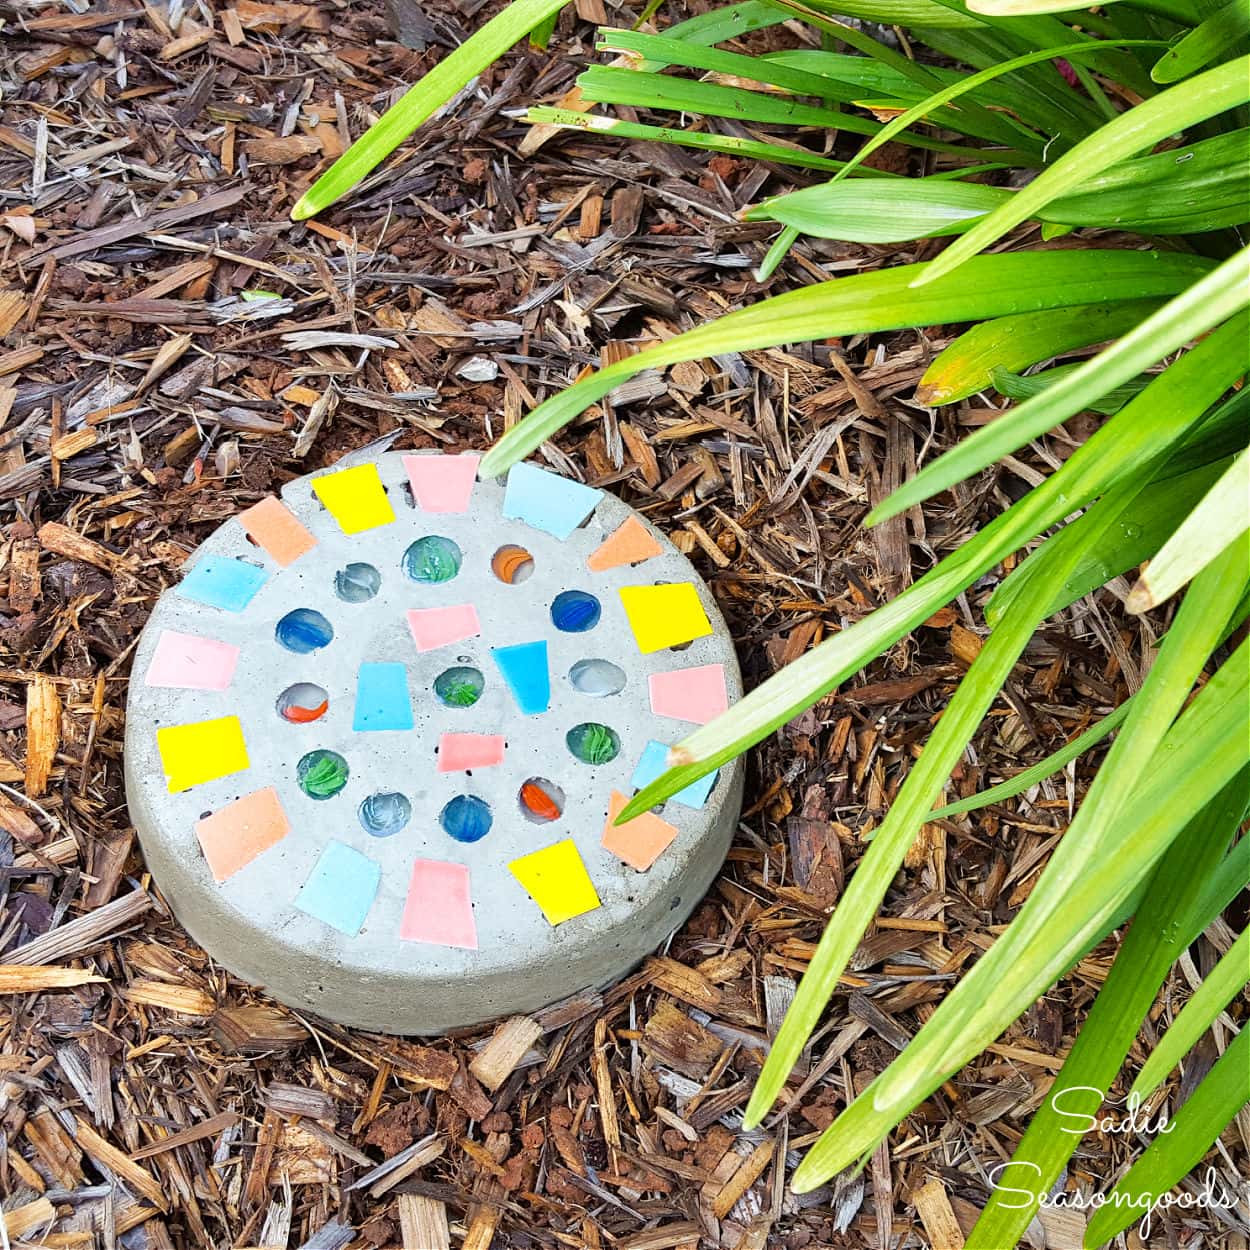 Mosaic Mold - Stepping Stone, 12 diameter, Round